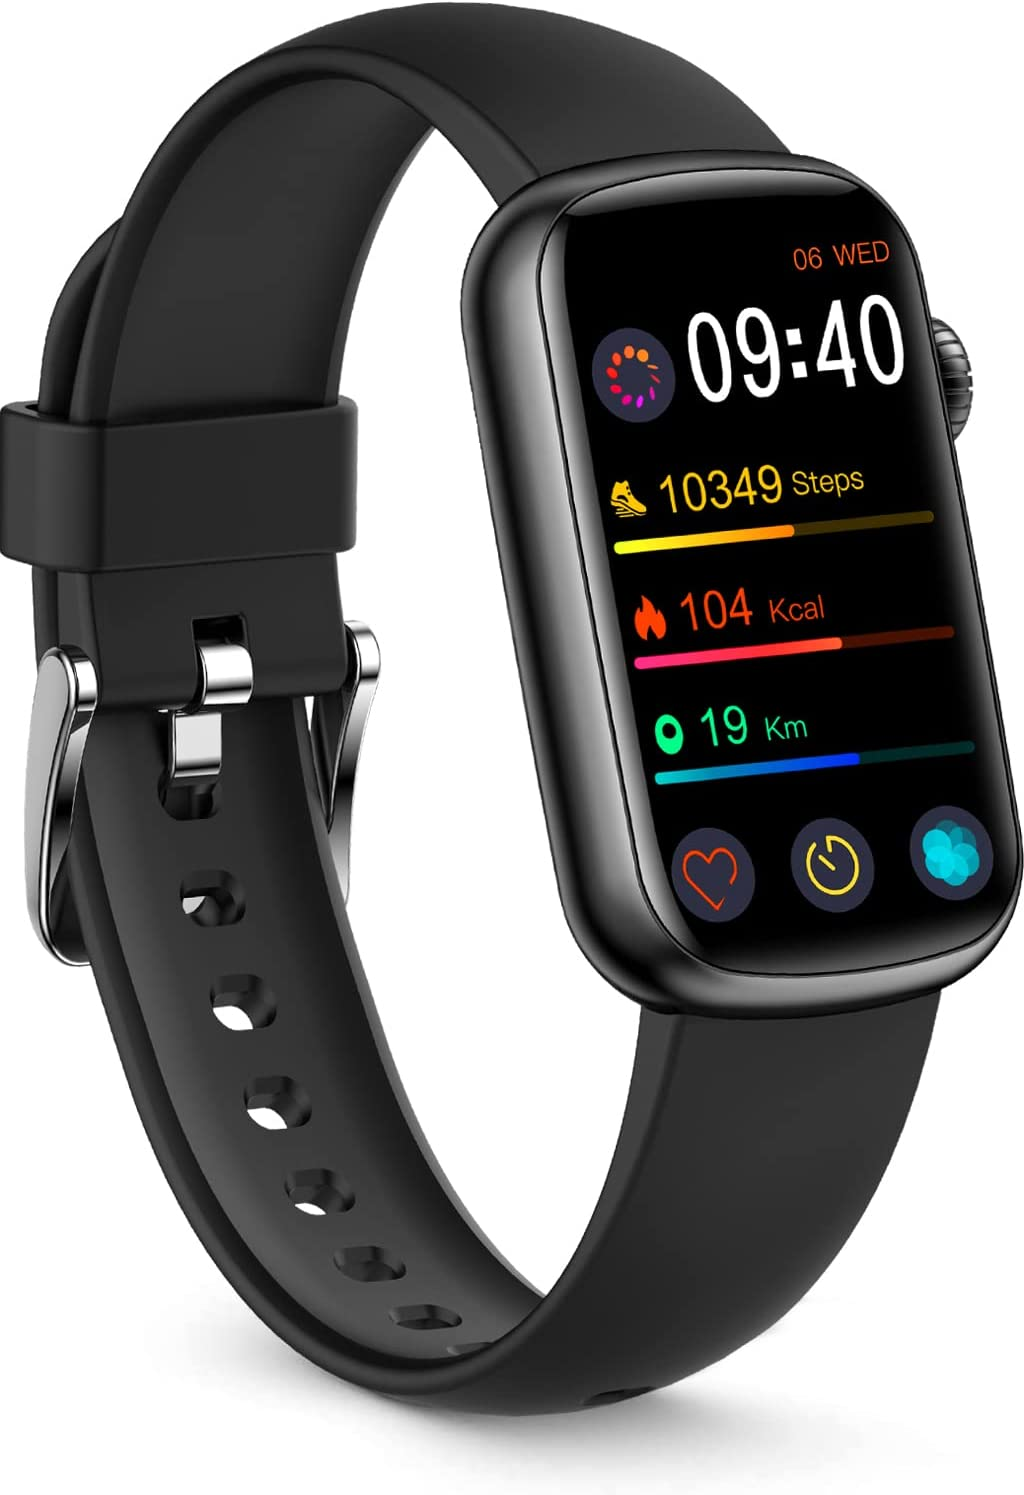 FITVII Slim Smart Watch with Fitness Tracker